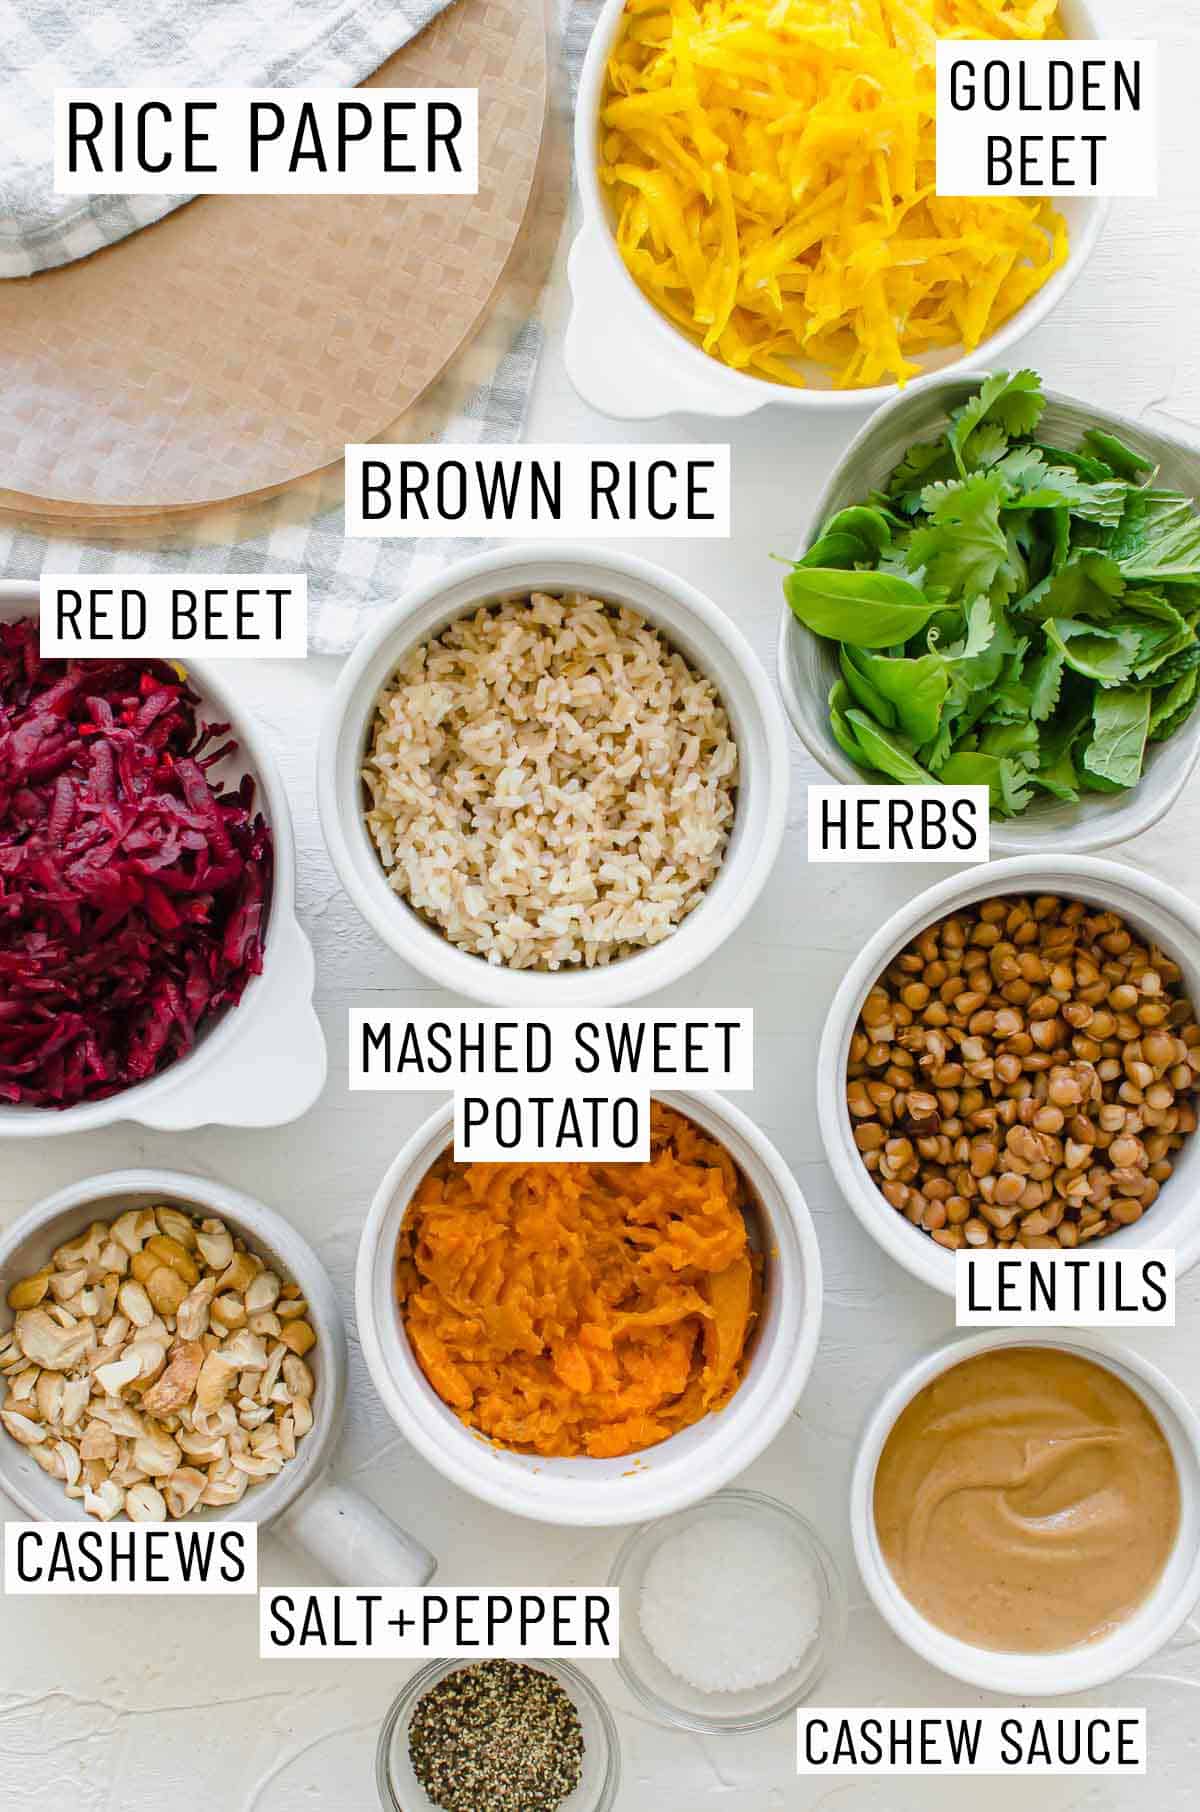 Ingredients needed to make vegetable spring rolls.